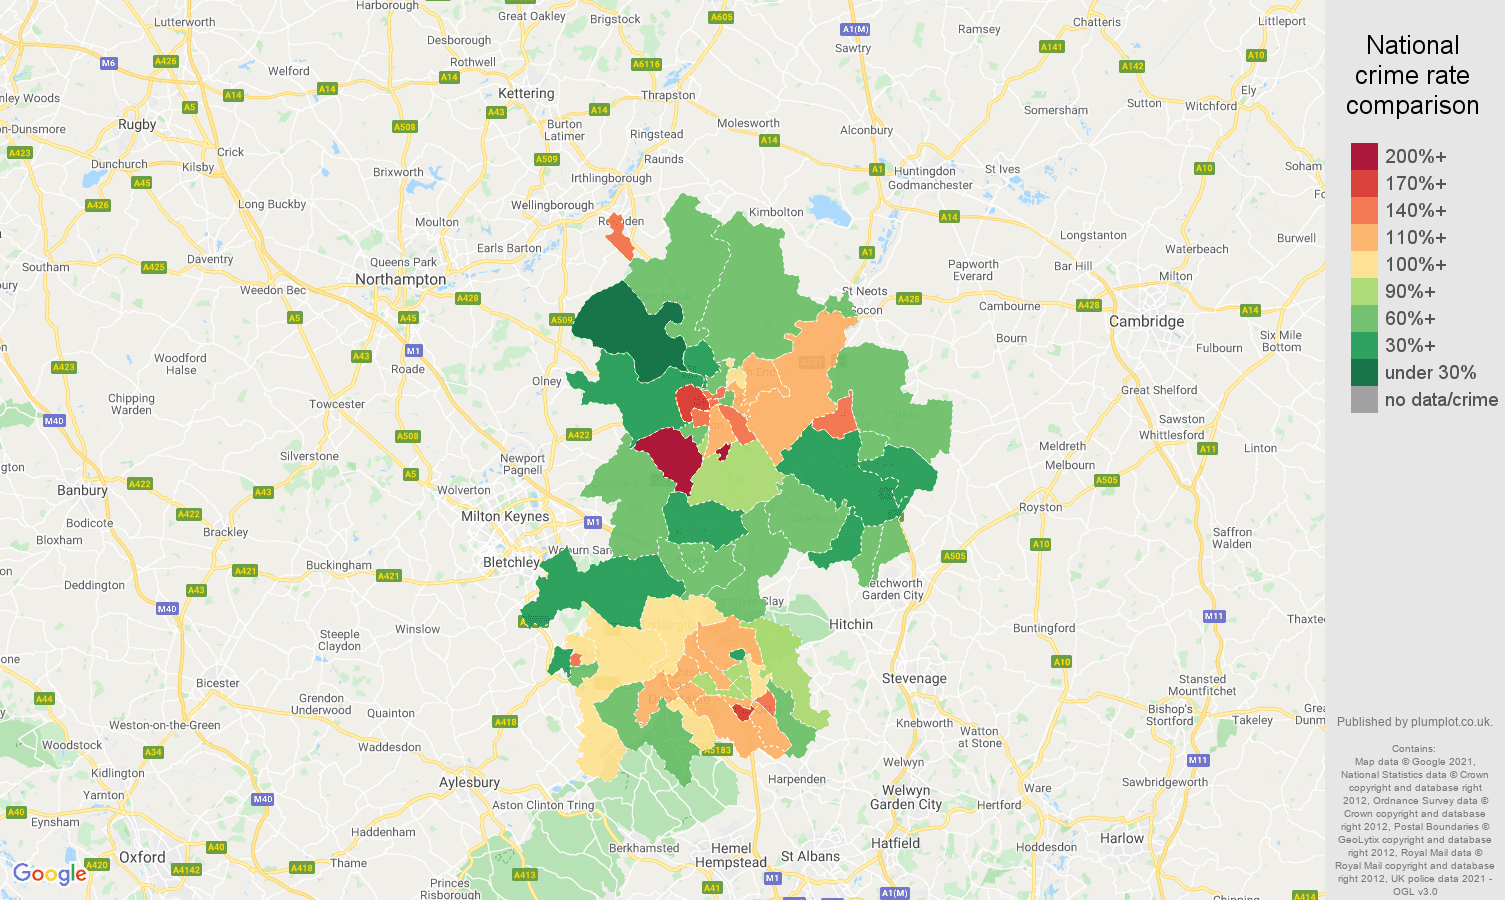 Bedfordshire criminal damage and arson crime rate comparison map